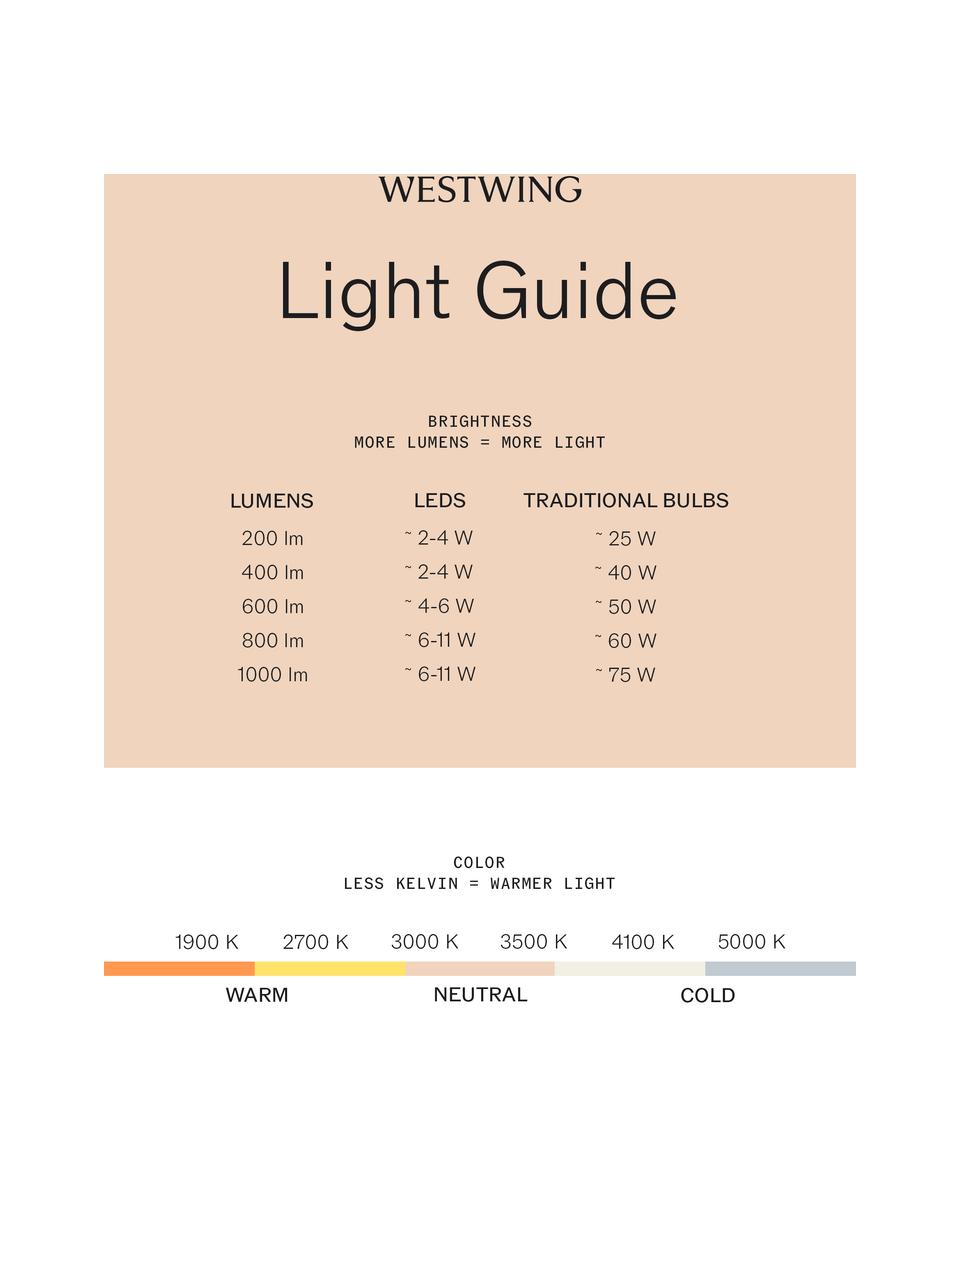 Dimbare LED wandlamp Yuh met timerfunctie, Lampenkap: gelakt aluminium, Wit, messing, B 30 x H 63 cm